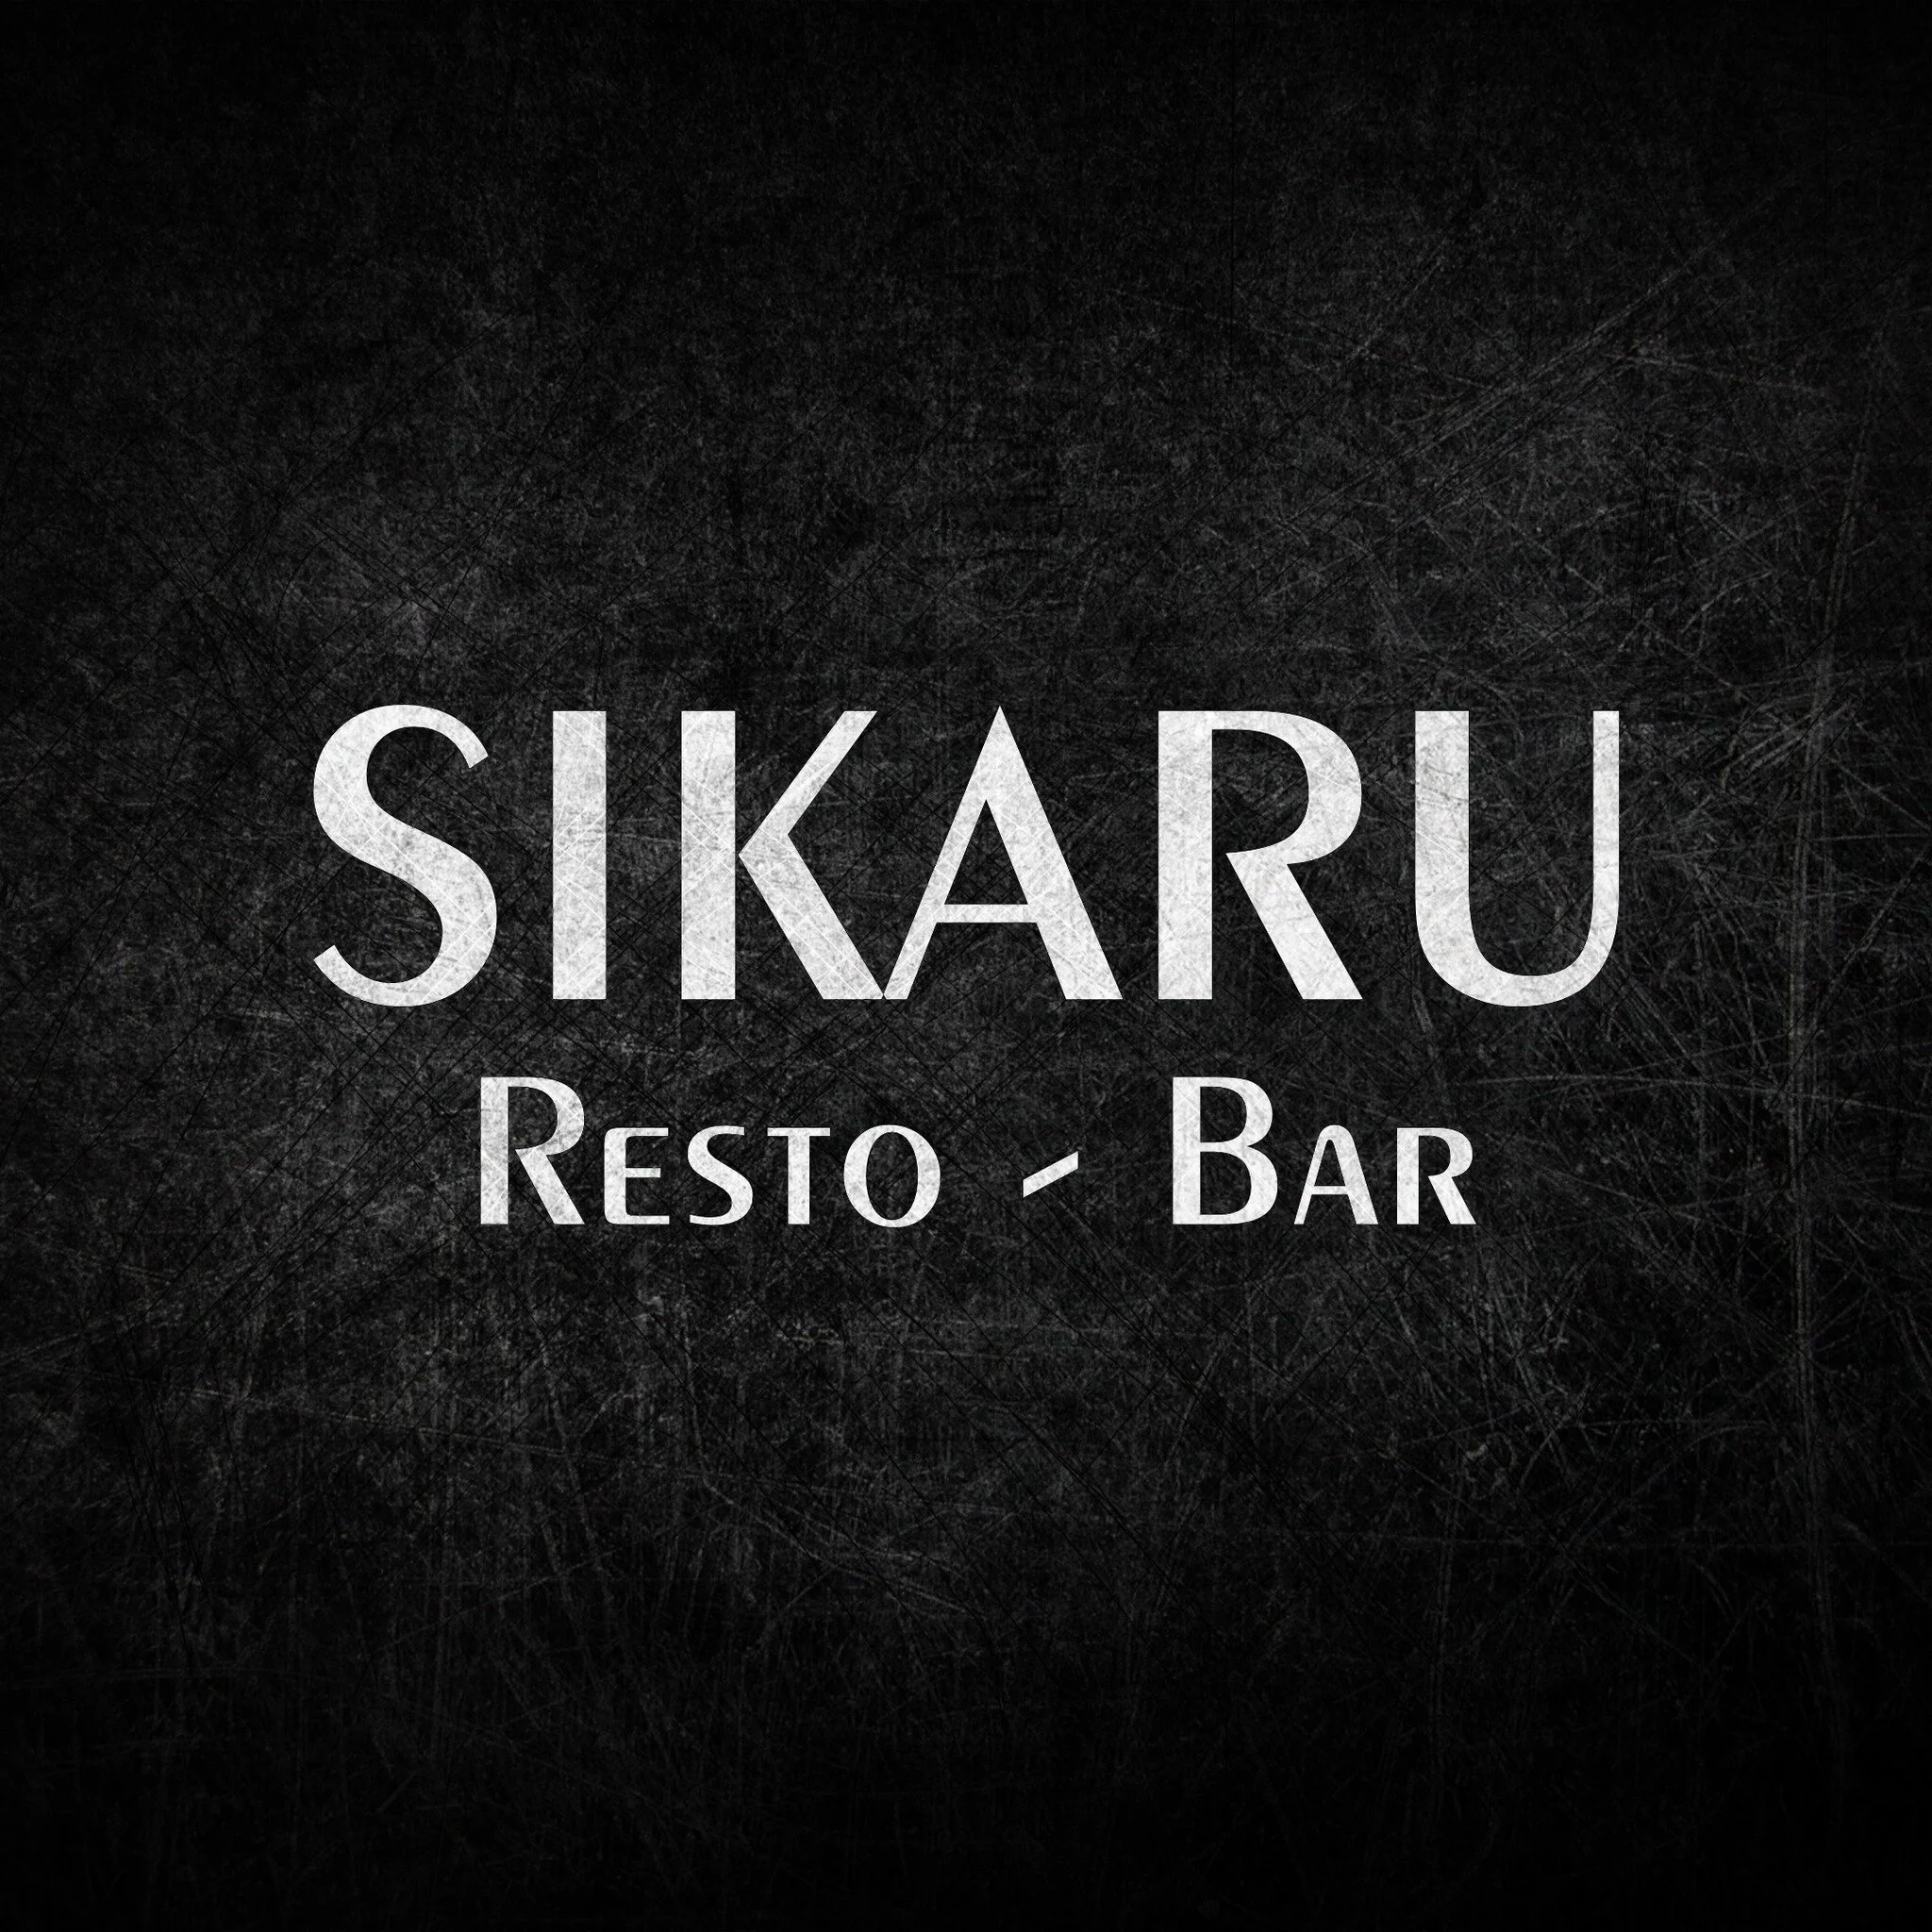 Sikaru 3/4 Resto - Bar-6051